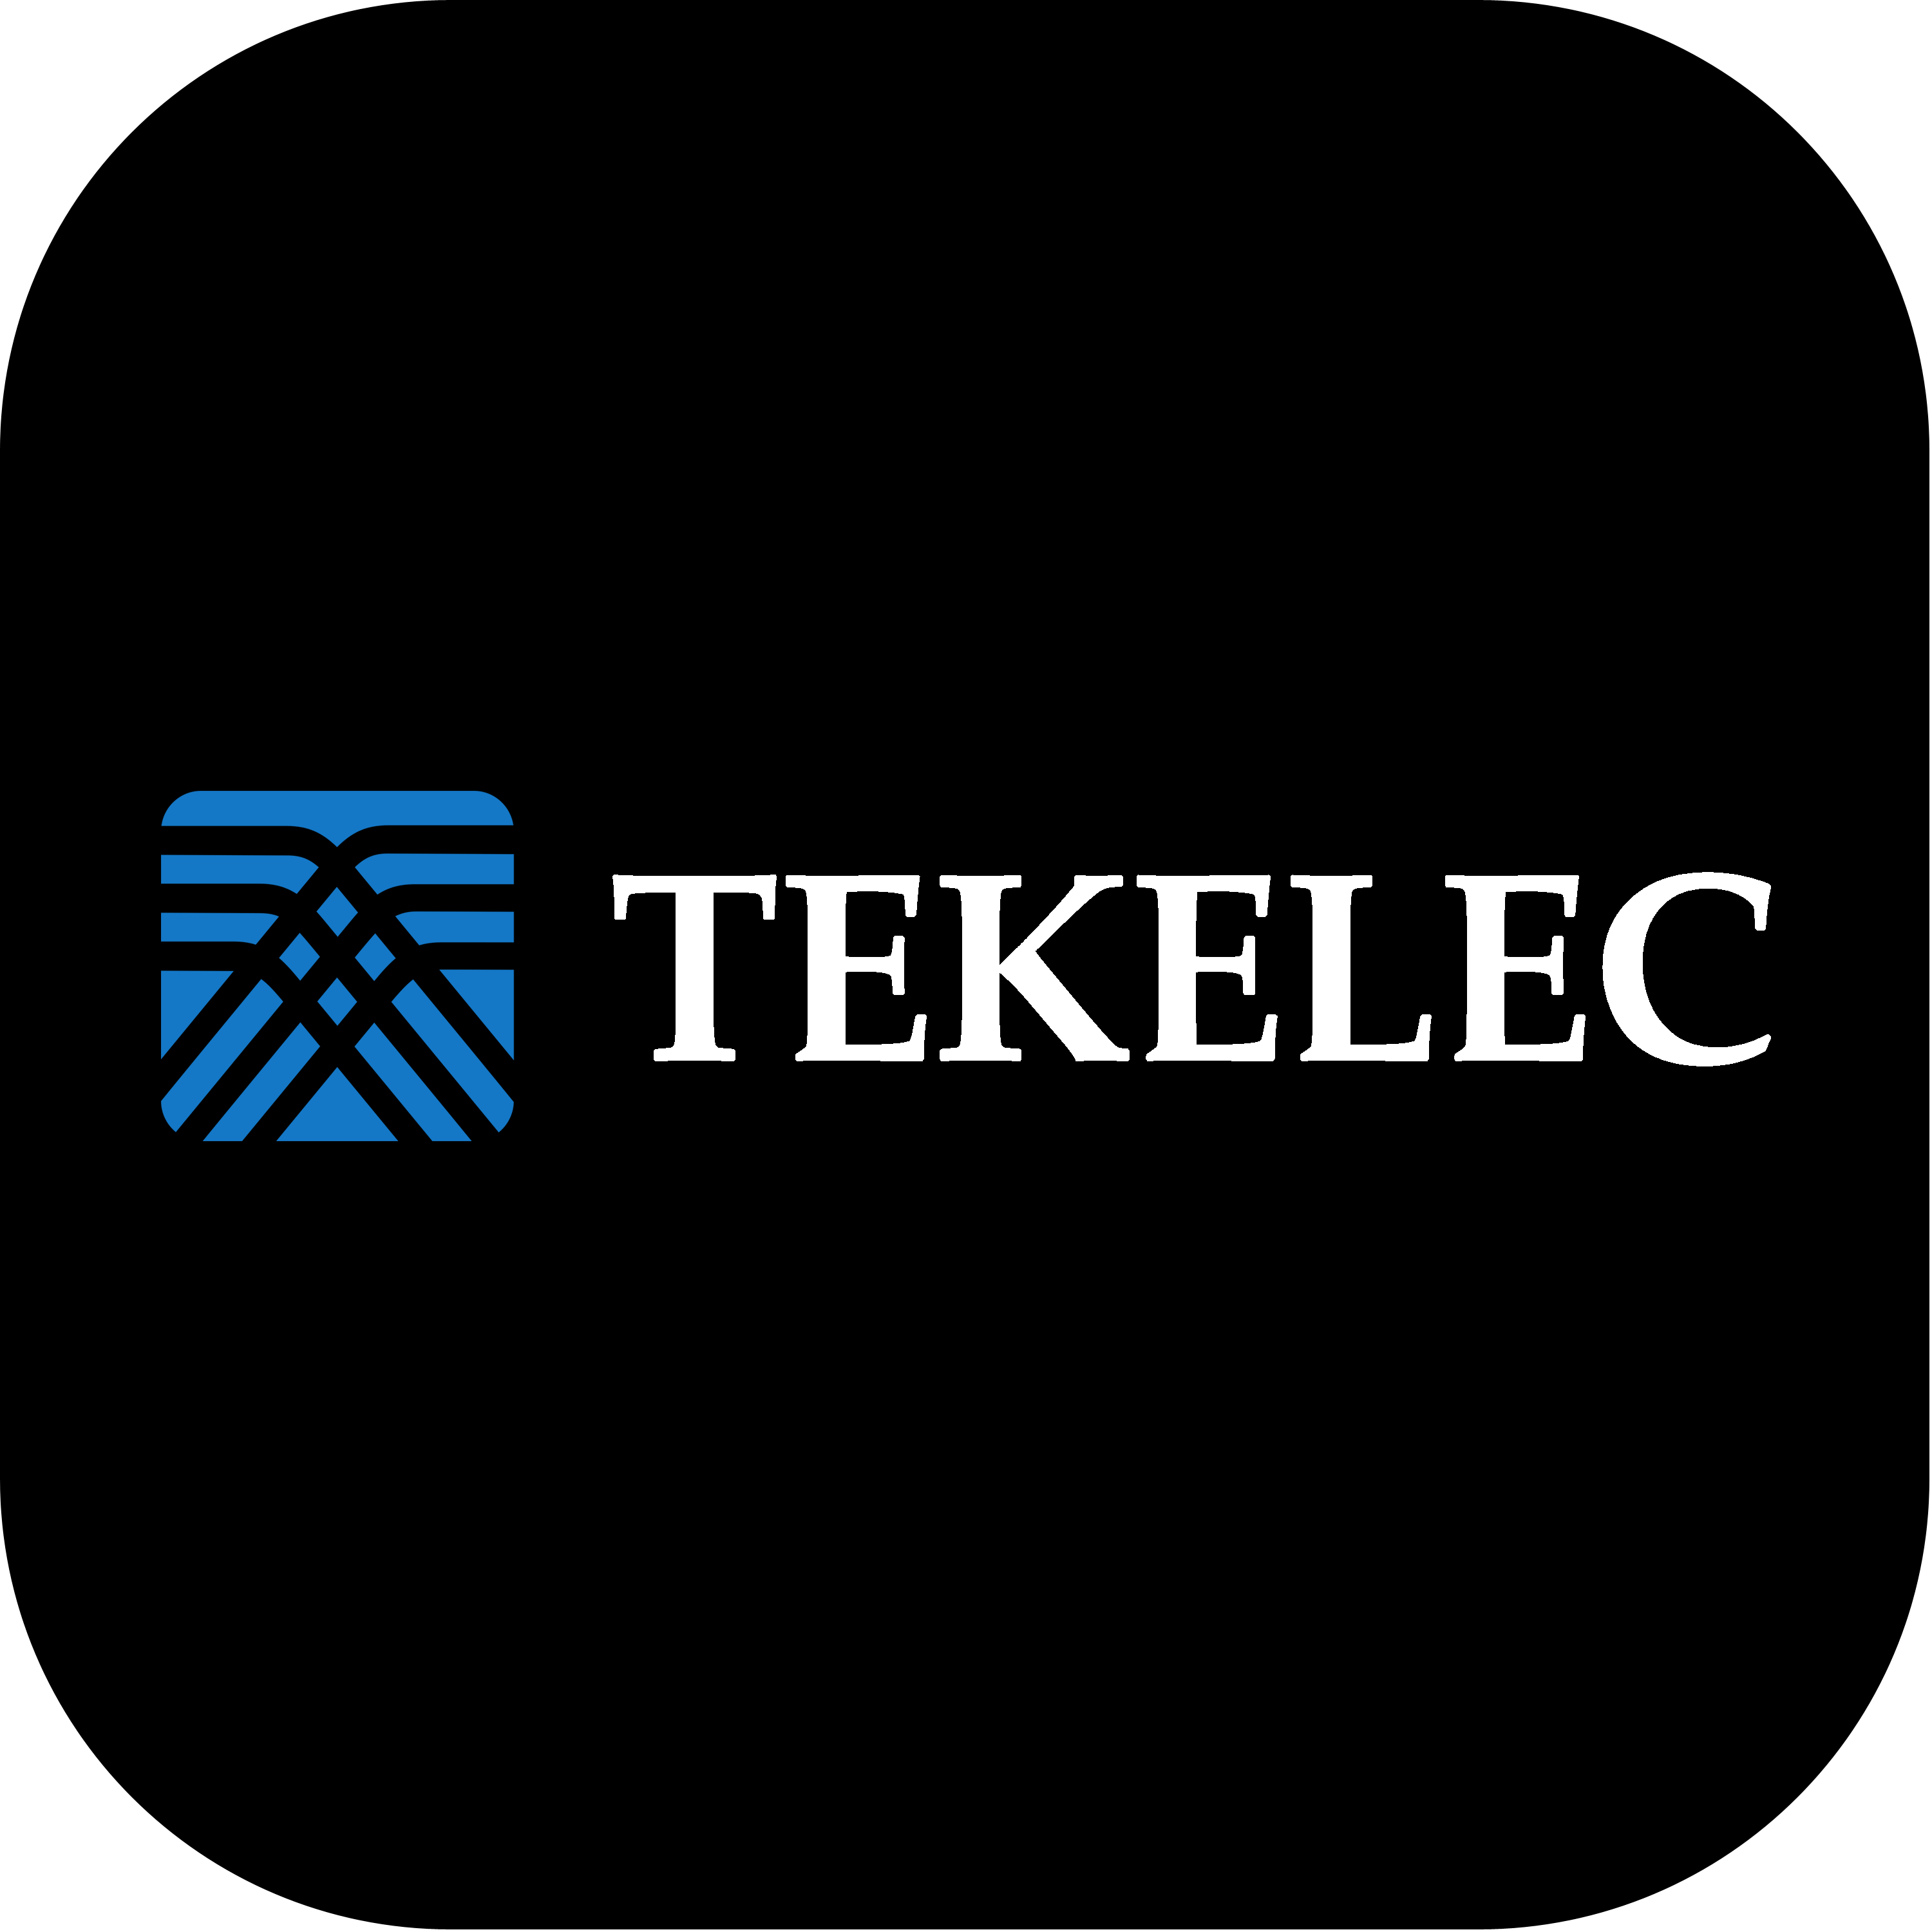 Tekelec Logo Transparent Picture